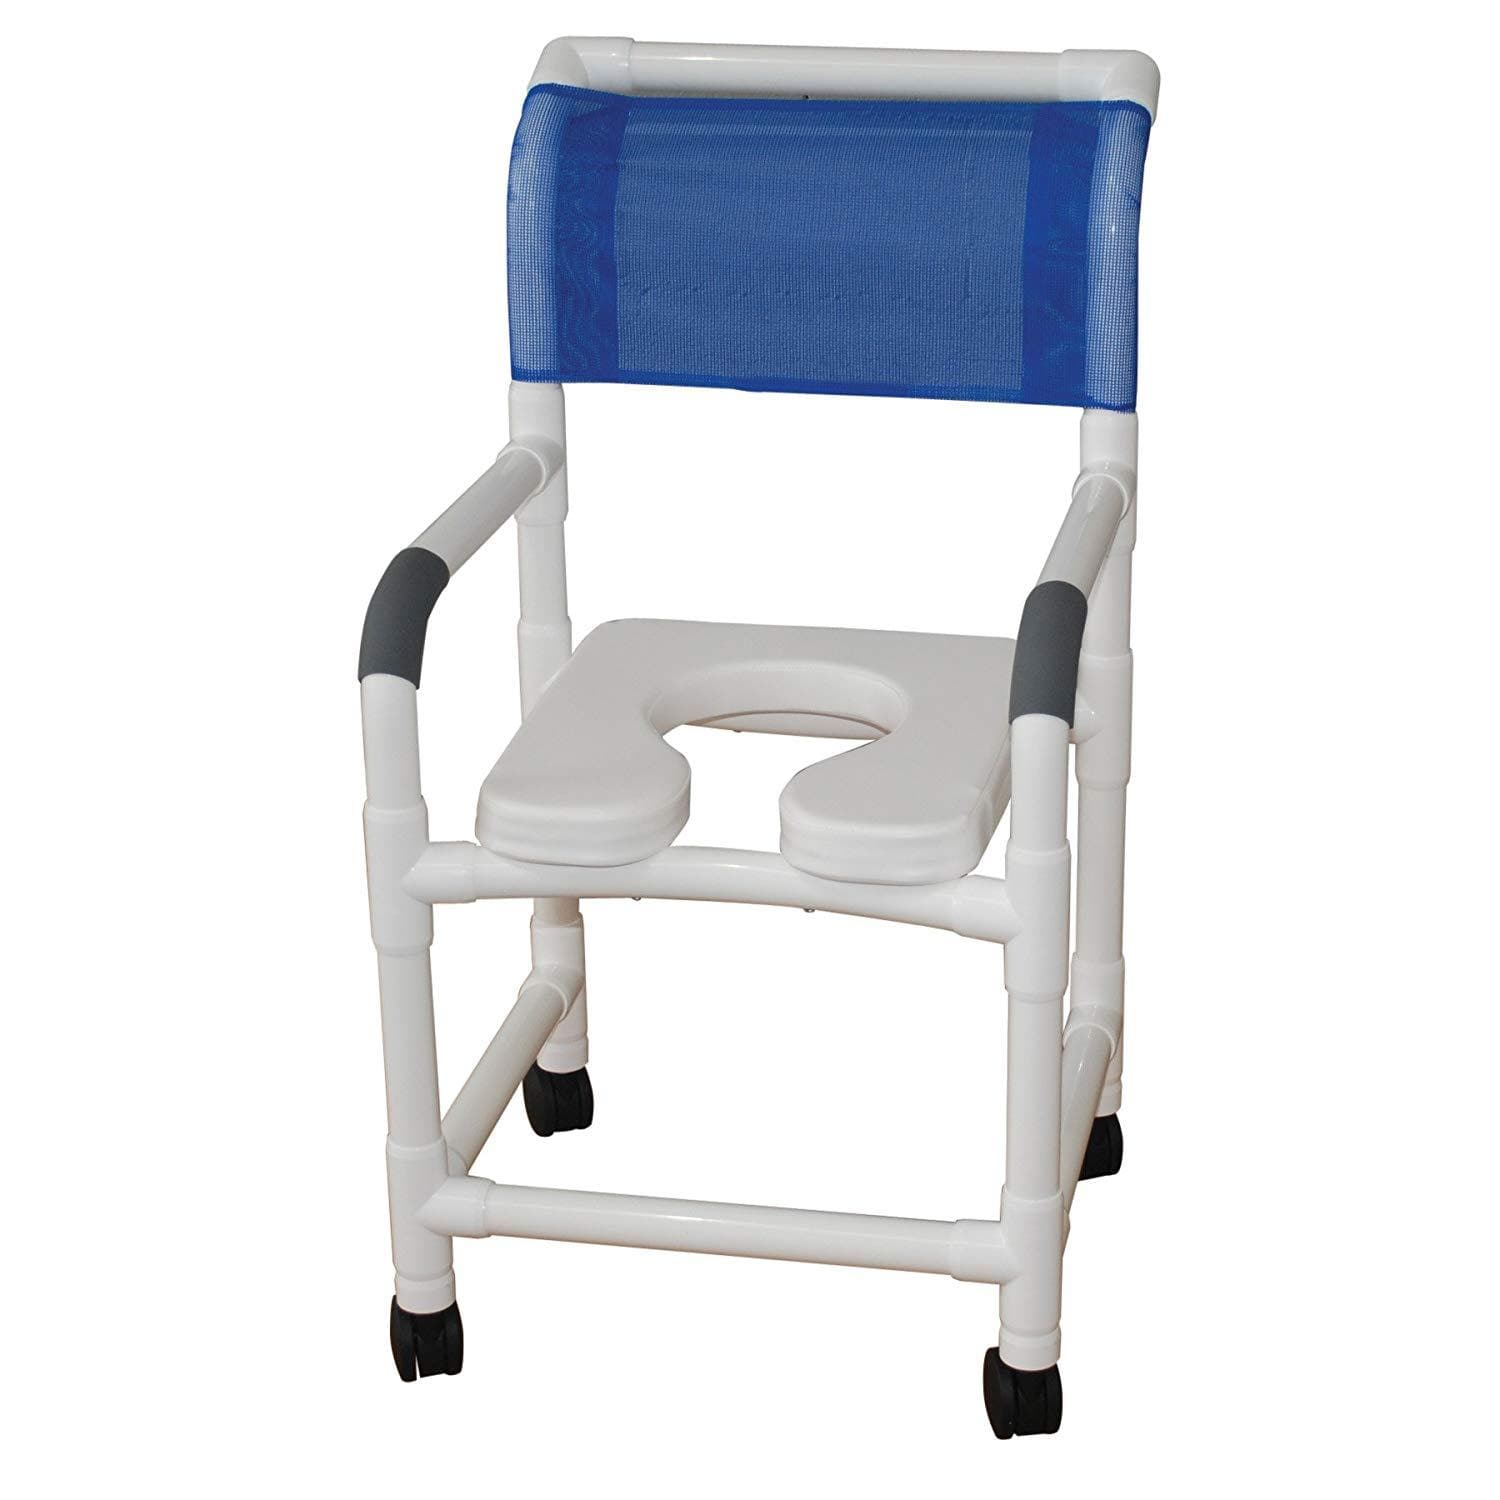 MJM International Standard Shower Chair with Soft Seat - Senior.com Bath Benches & Seats